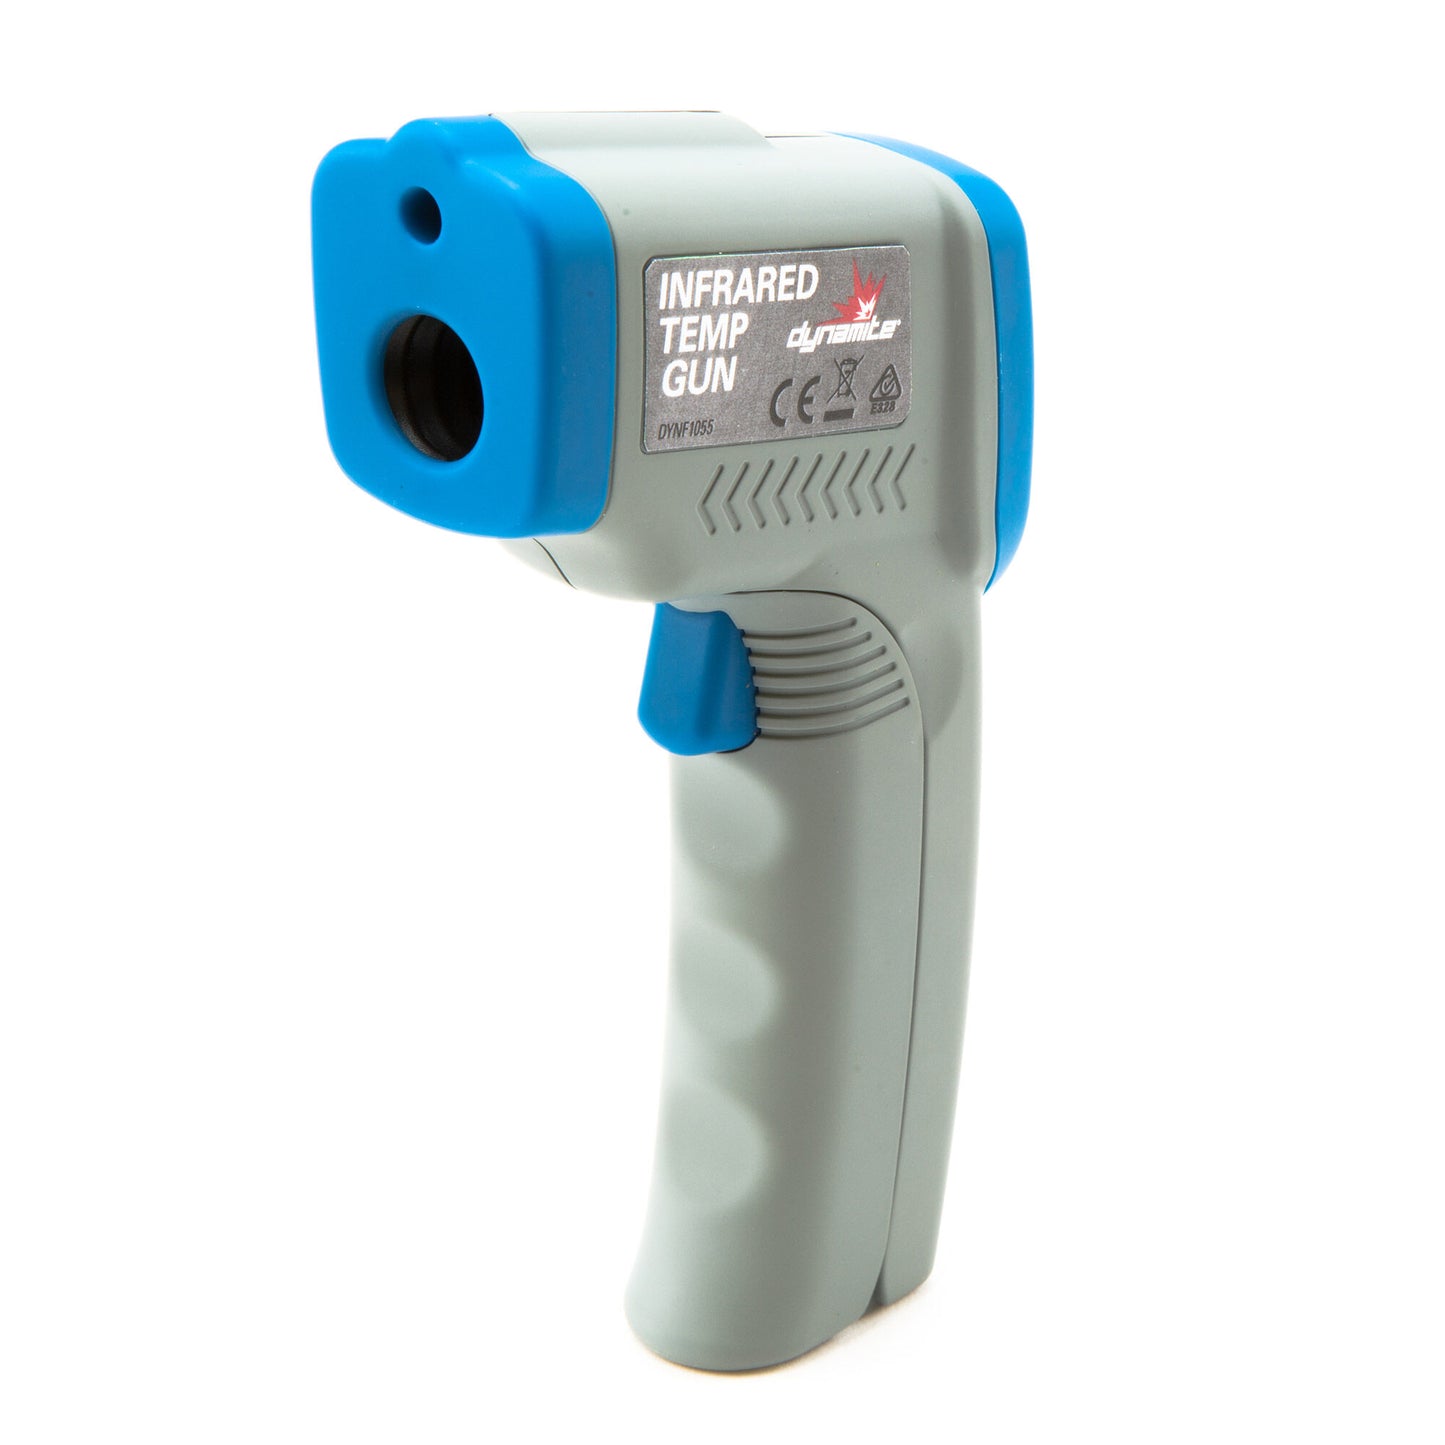 Infrared Temp Gun/Thermometer